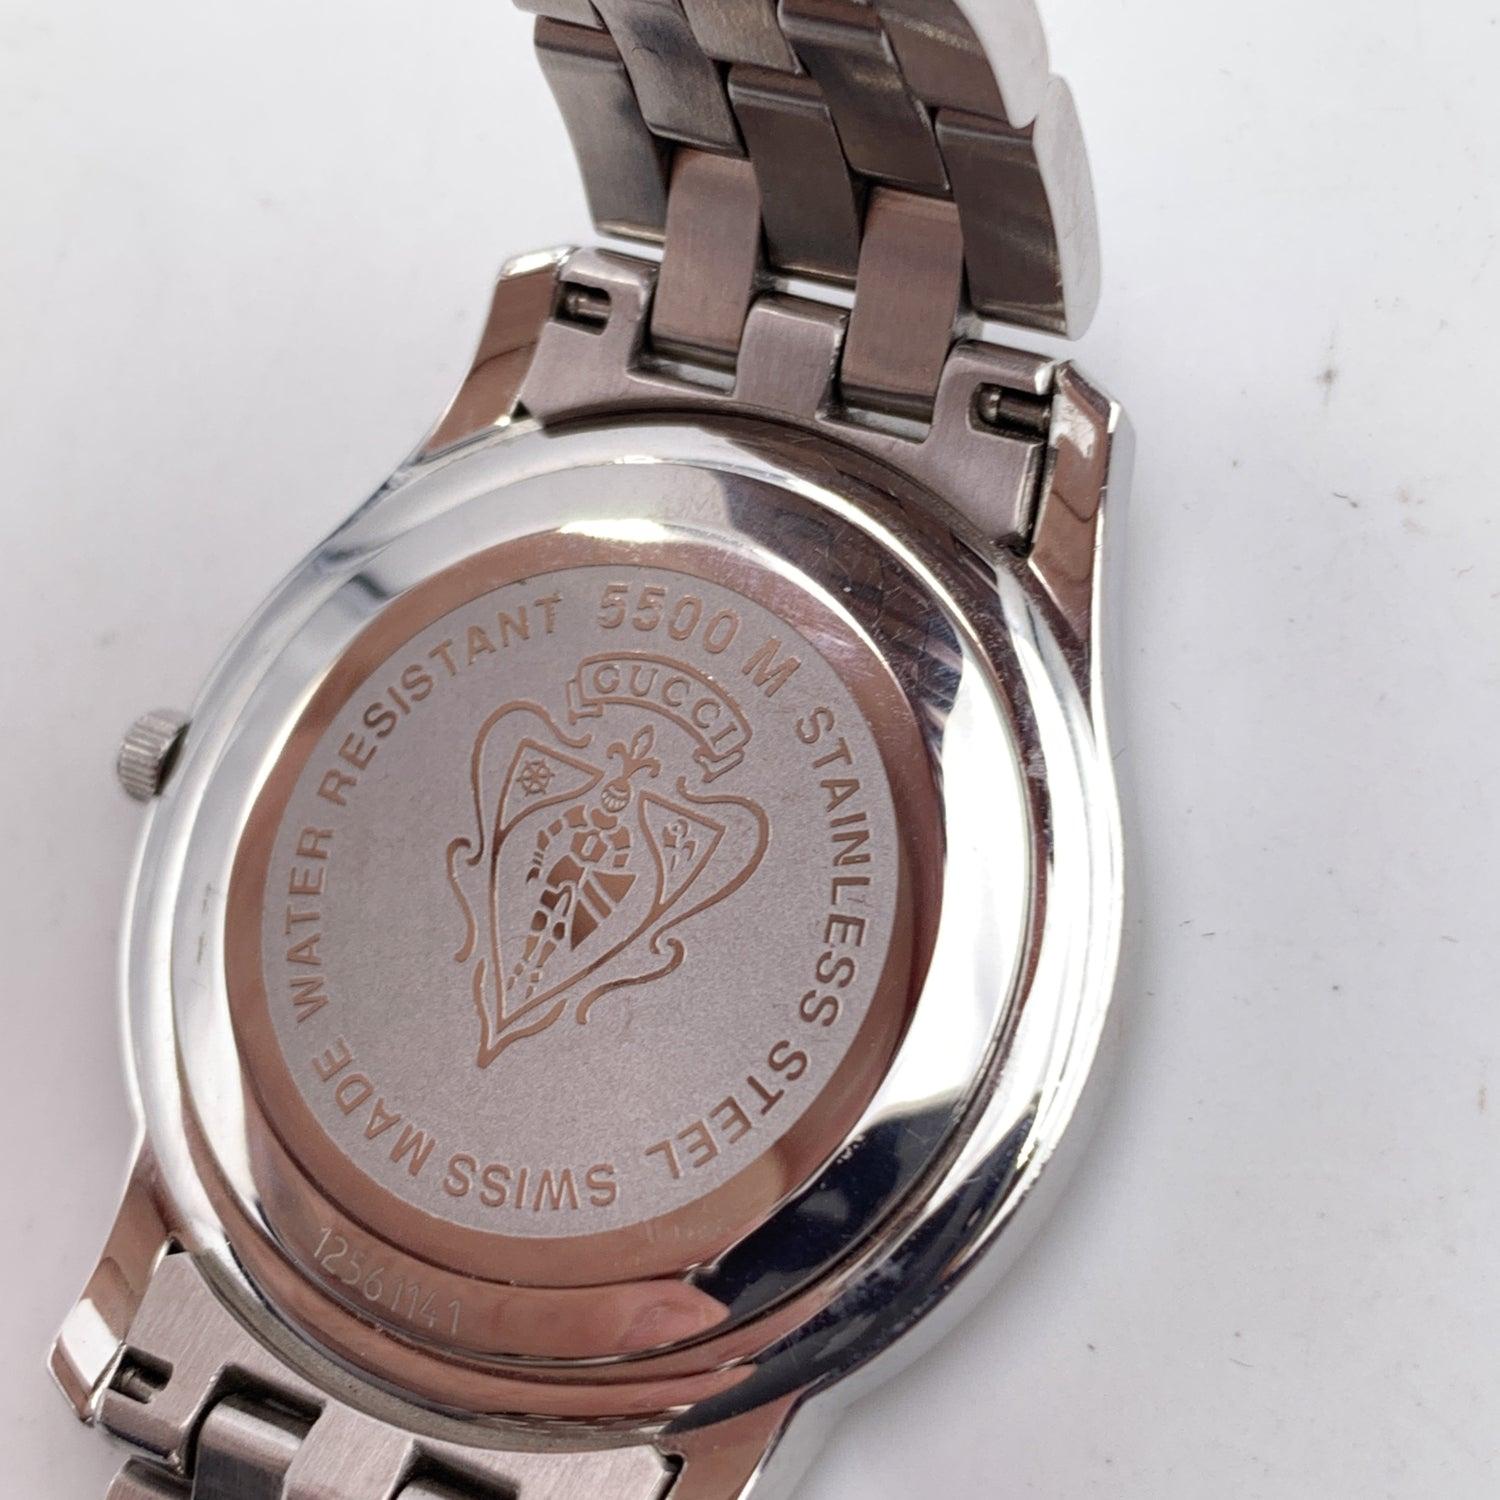 Gucci Silver Stainless Steel Mod 5500 M Quartz Wrist Watch Black For Sale 1